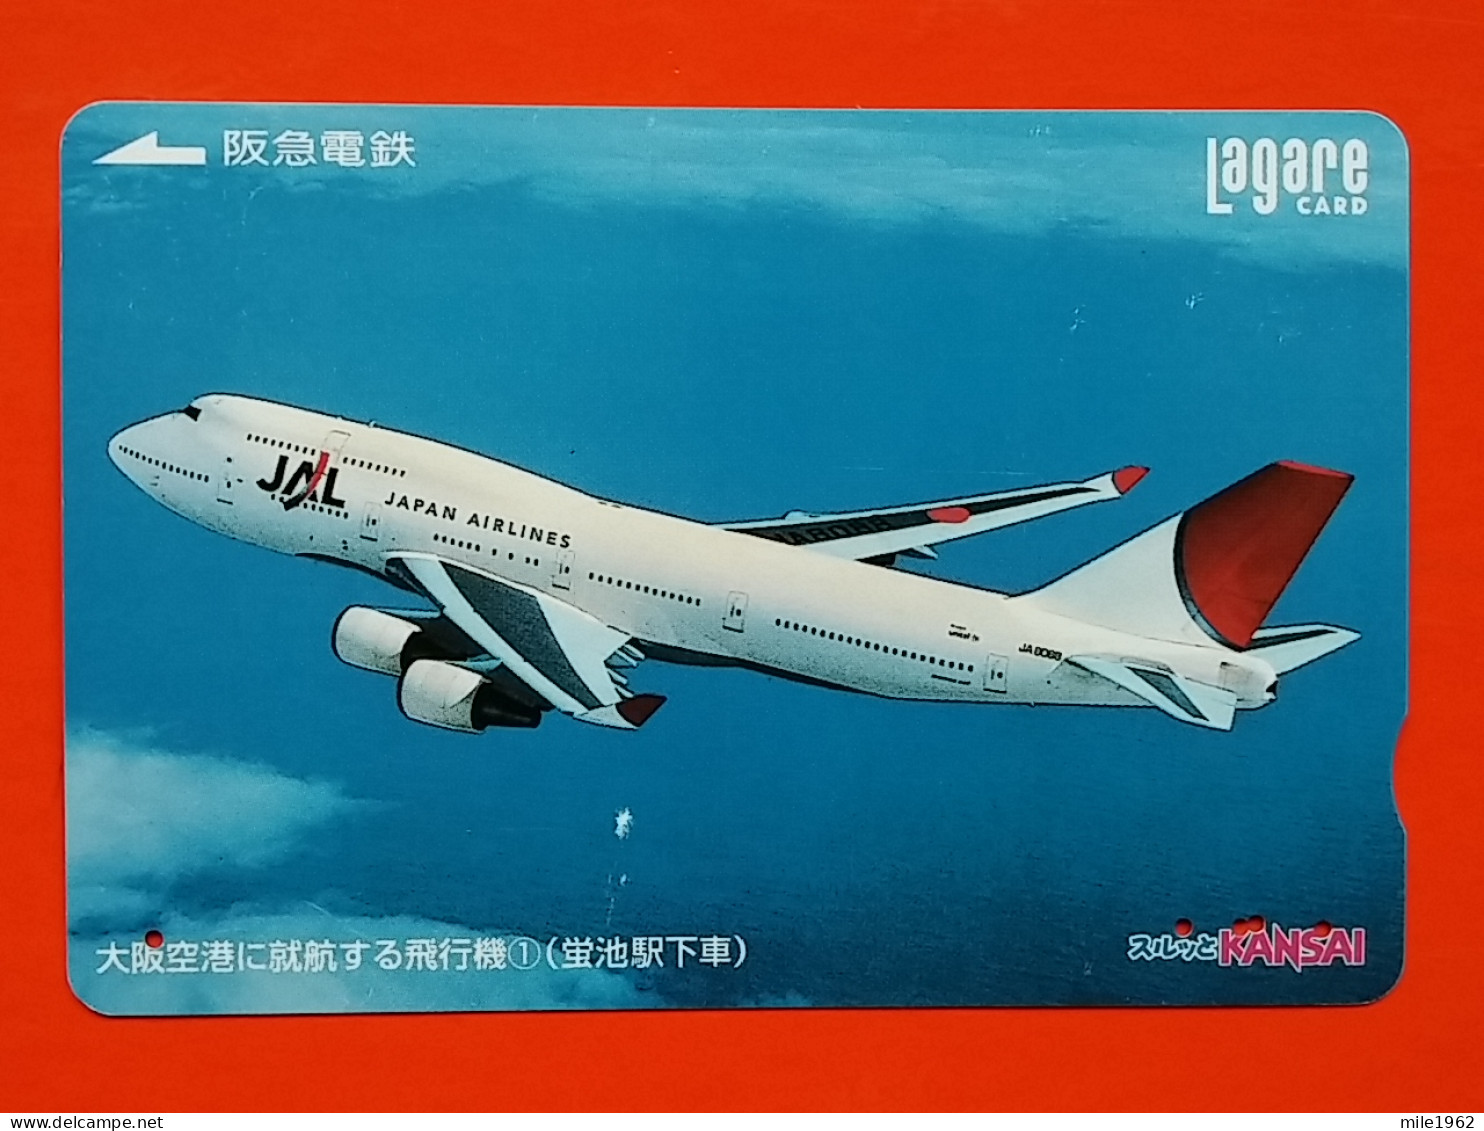 T-199 - JAPAN -JAPON, NIPON, Carte Prepayee AVION, PLANE, AVIO,  - Flugzeuge